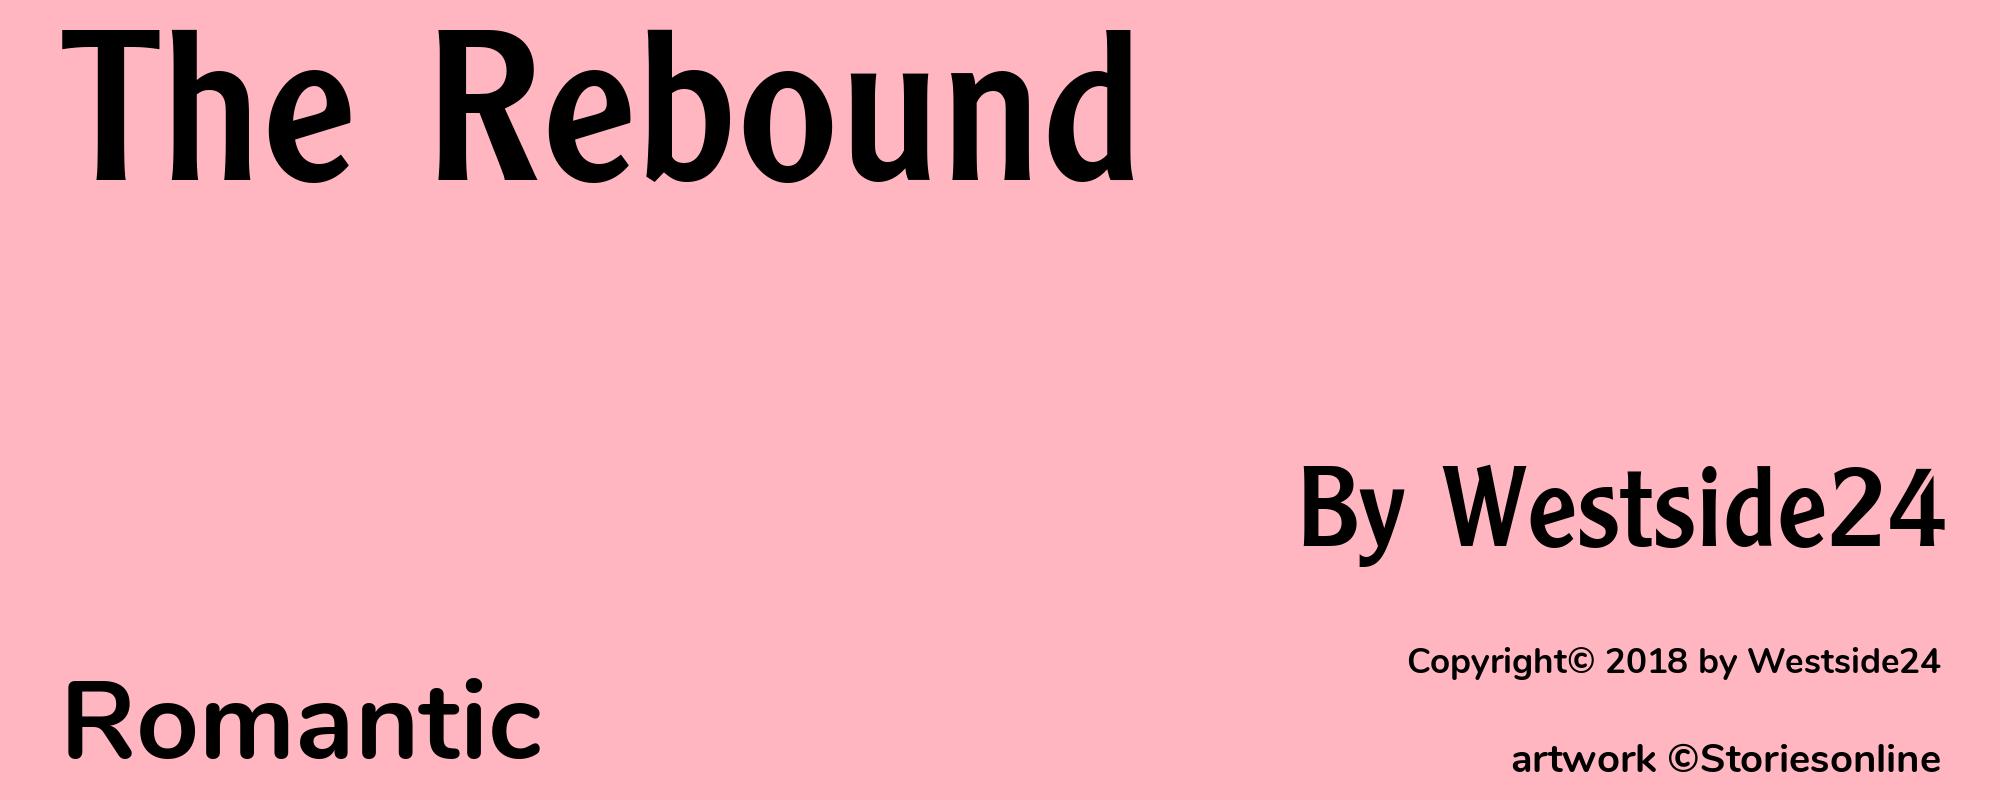 The Rebound - Cover